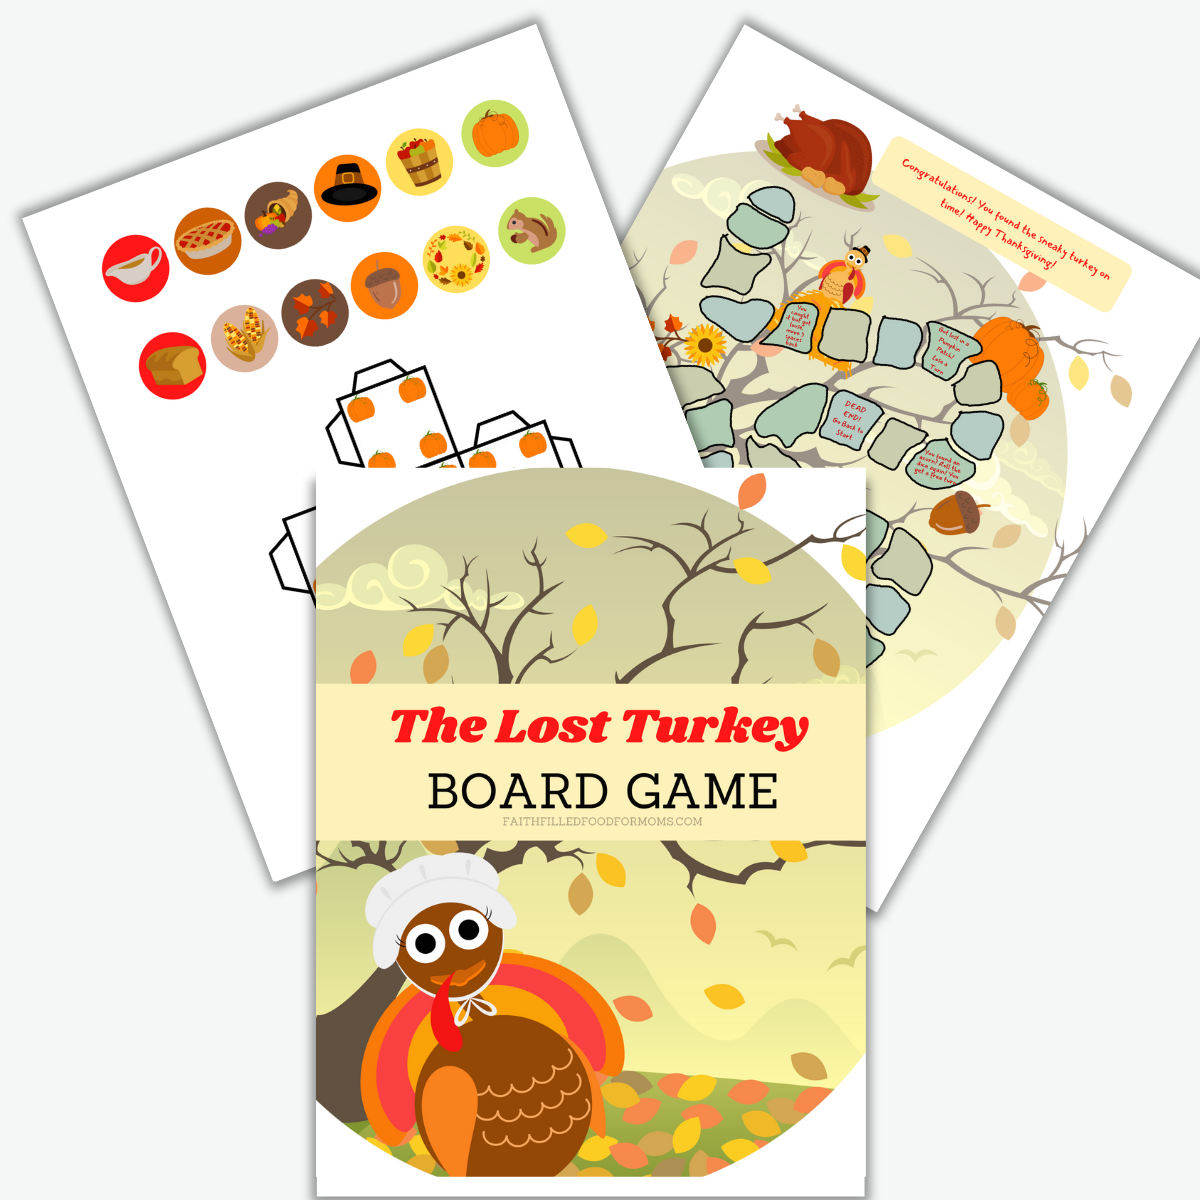 Find the Lost Turkey Game